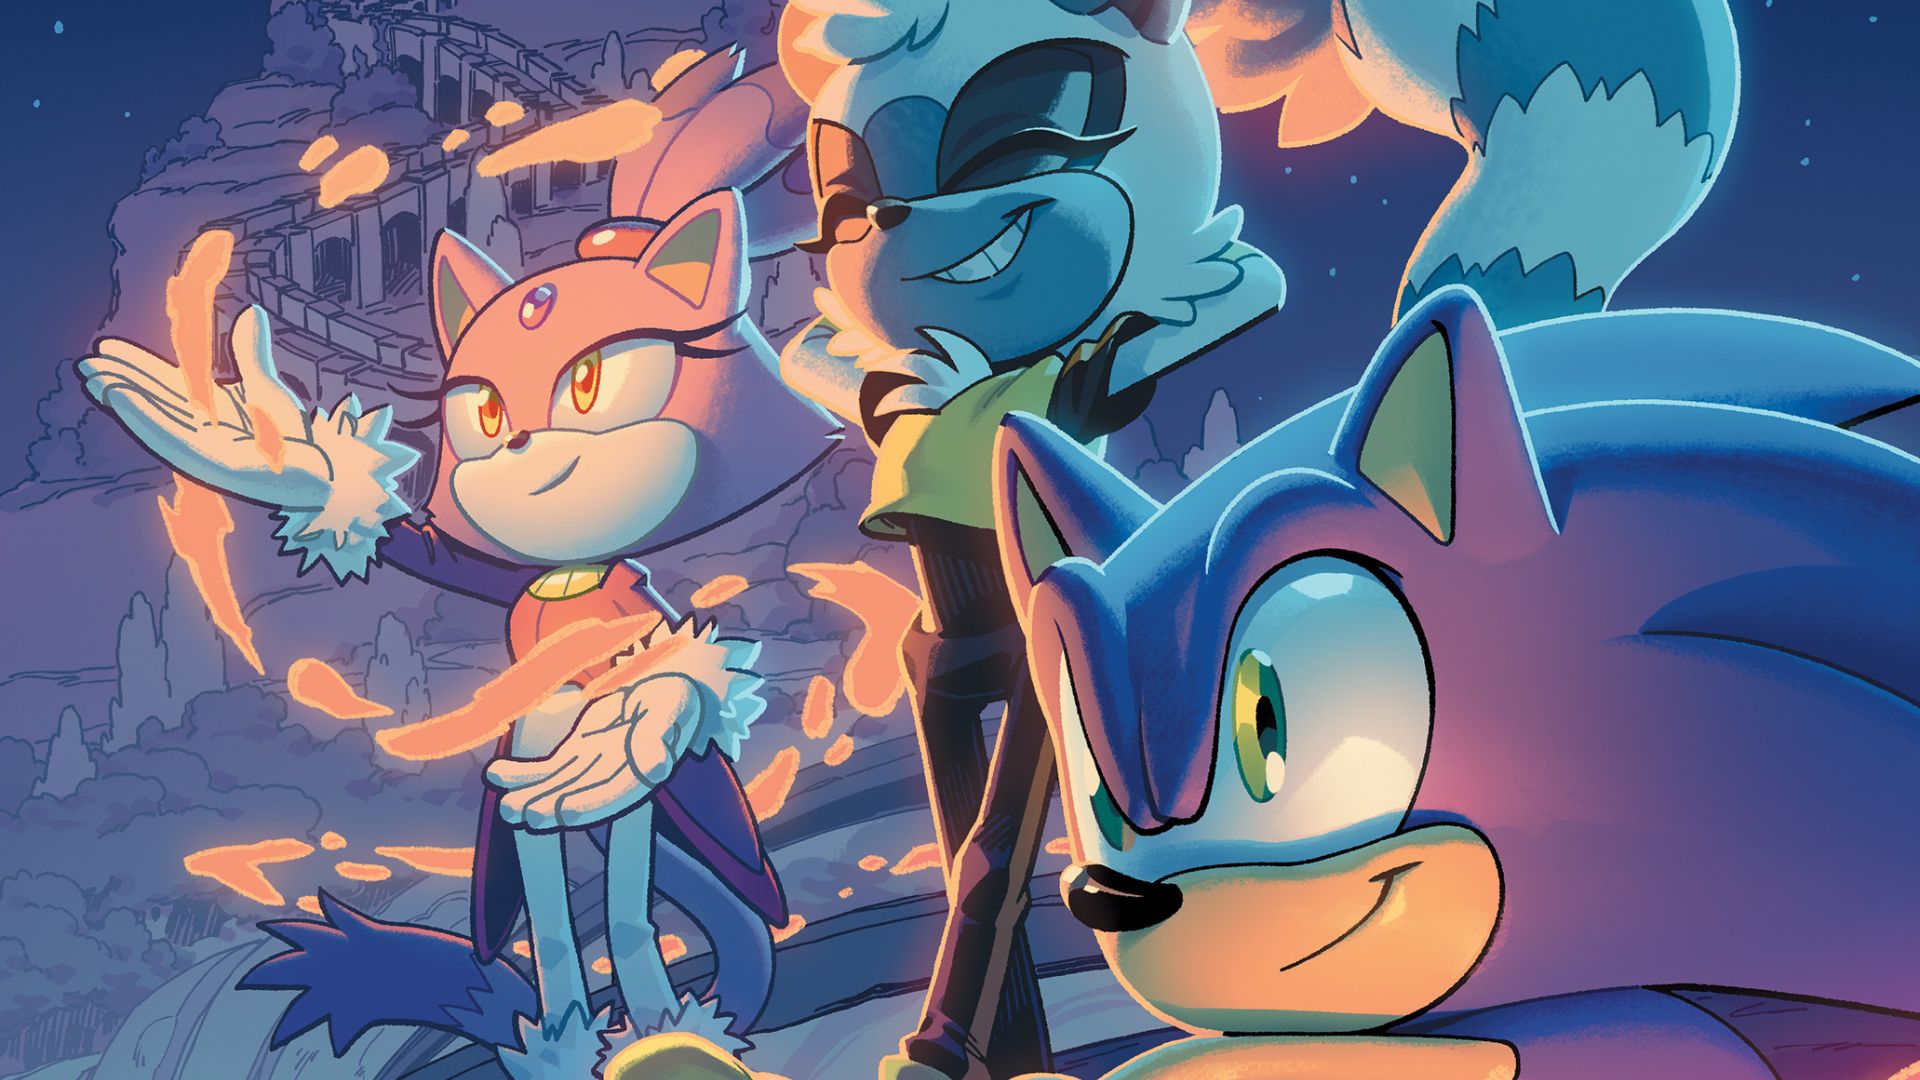 Sonic the Hedgehog is getting a sequel despite its nightmarish